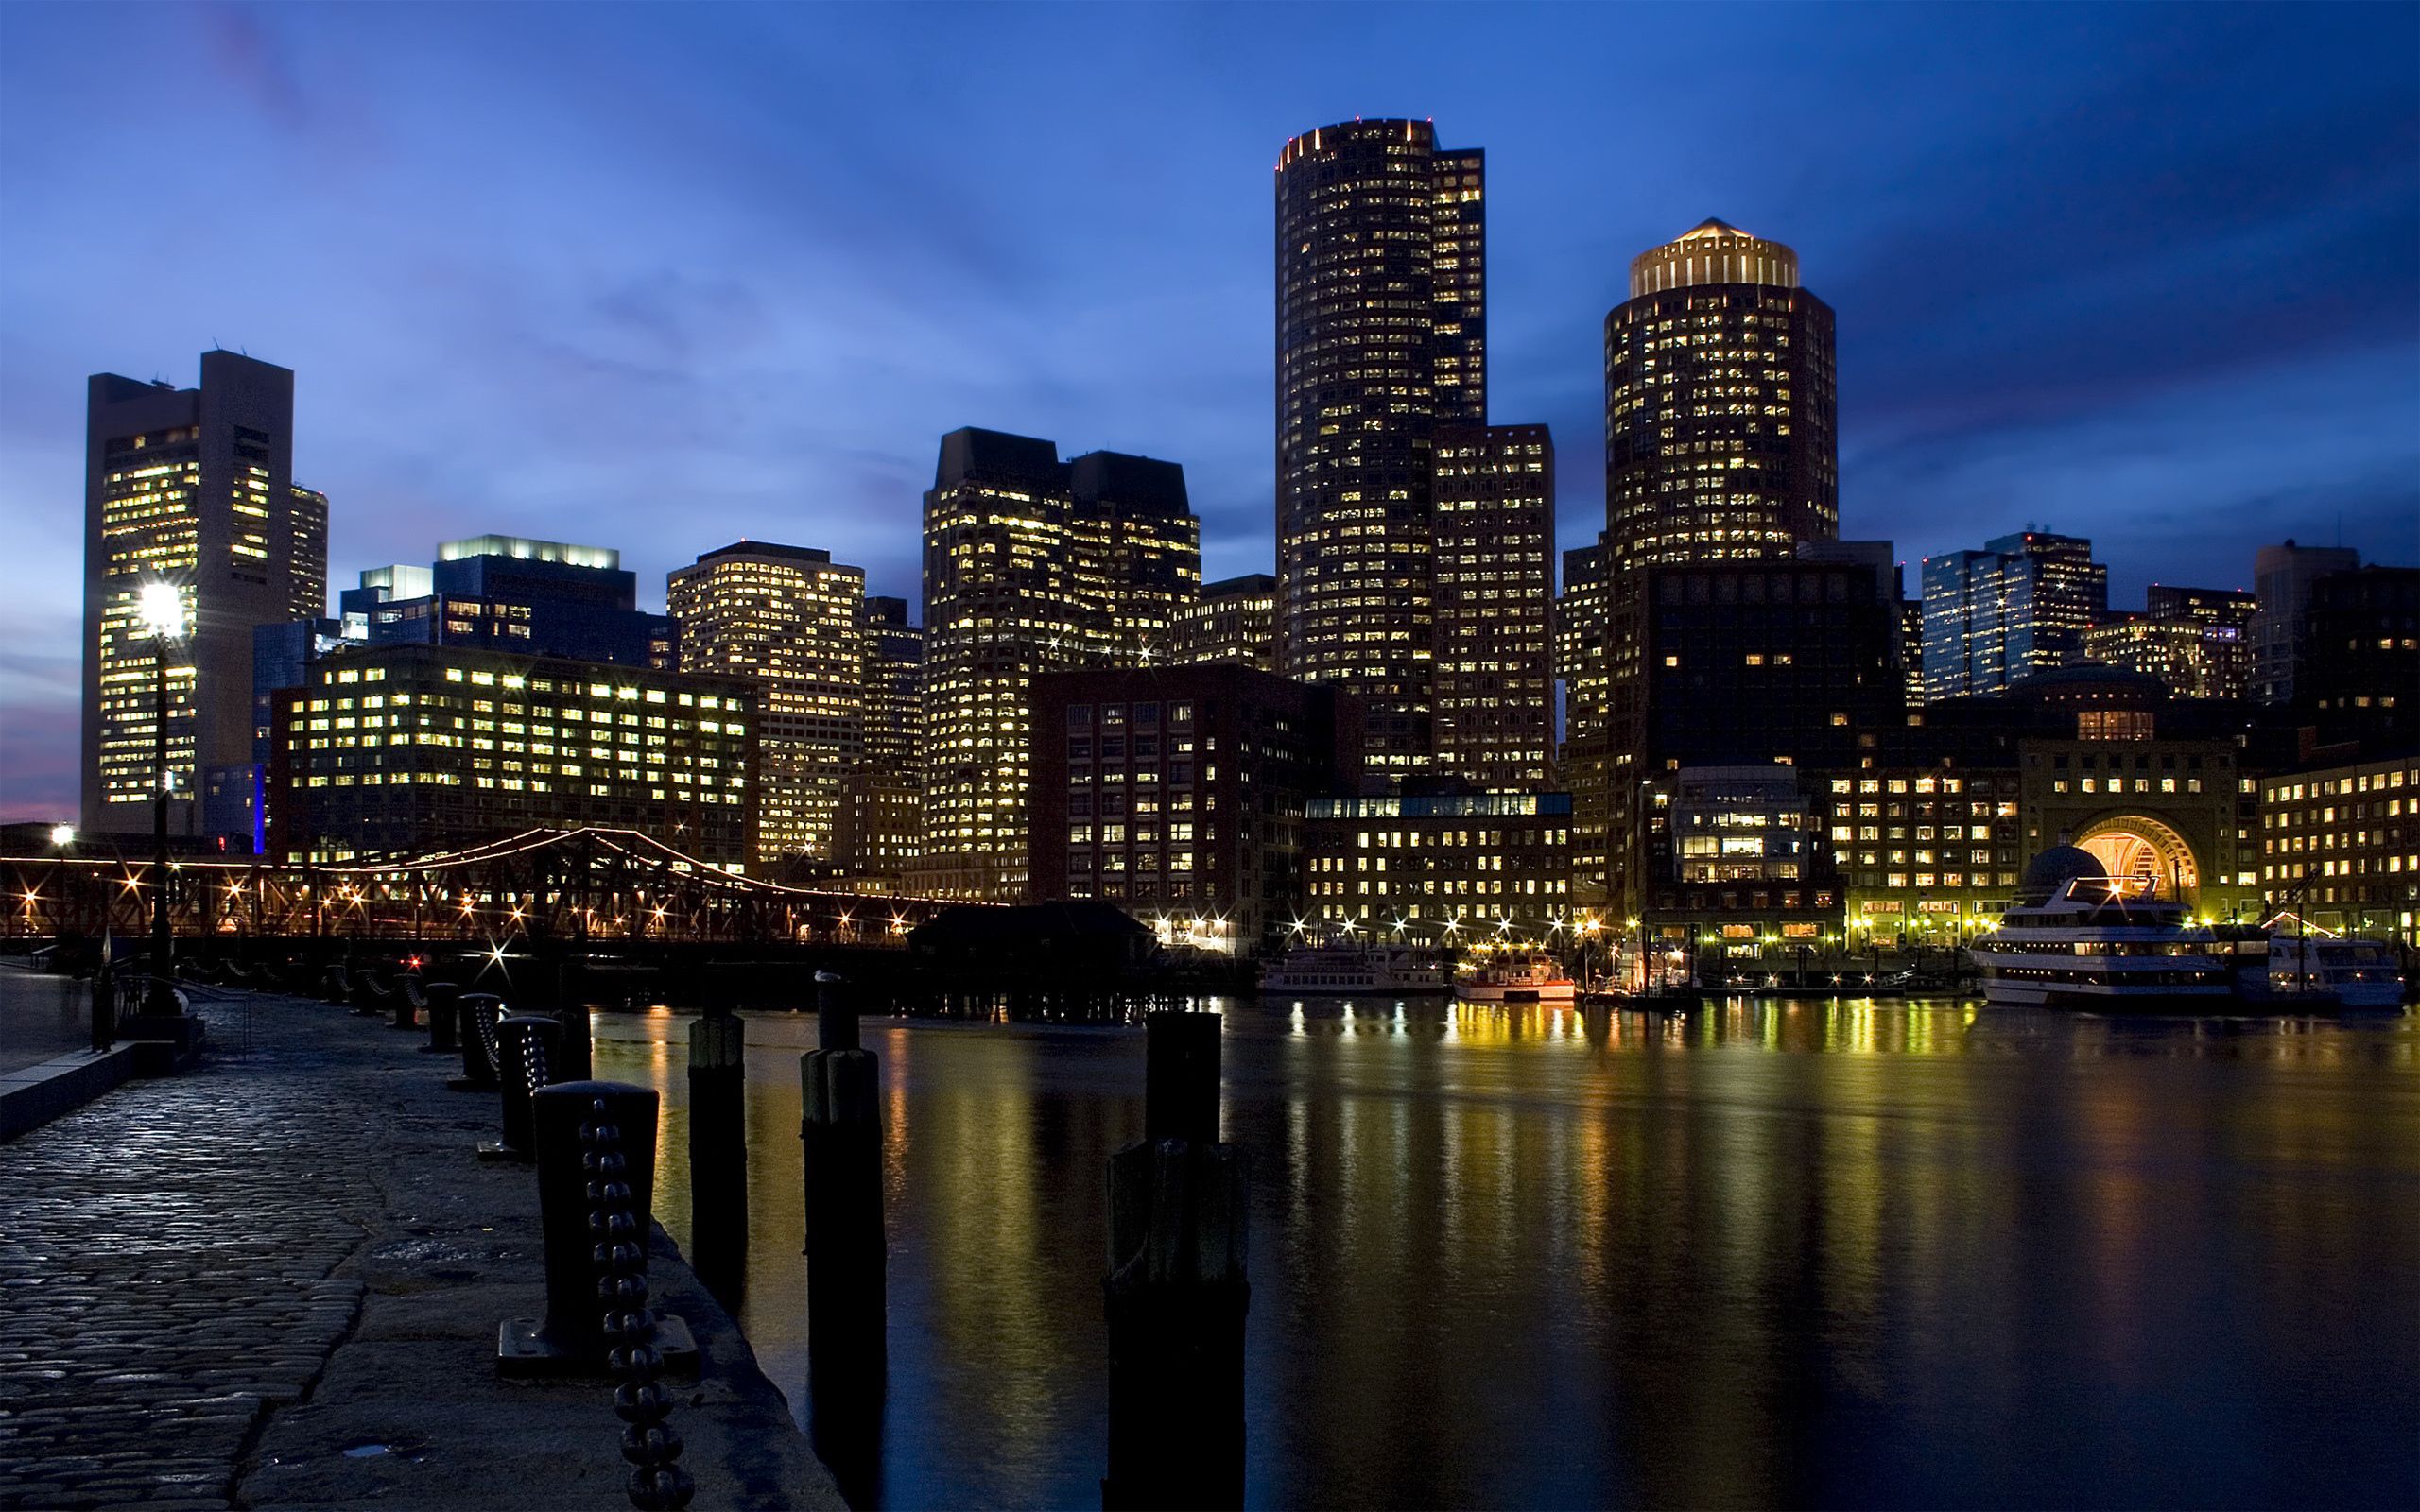 boston, cities, rivers, silence, loneliness, urban landscape, cityscape, coziness, comfort, calmness, tranquillity